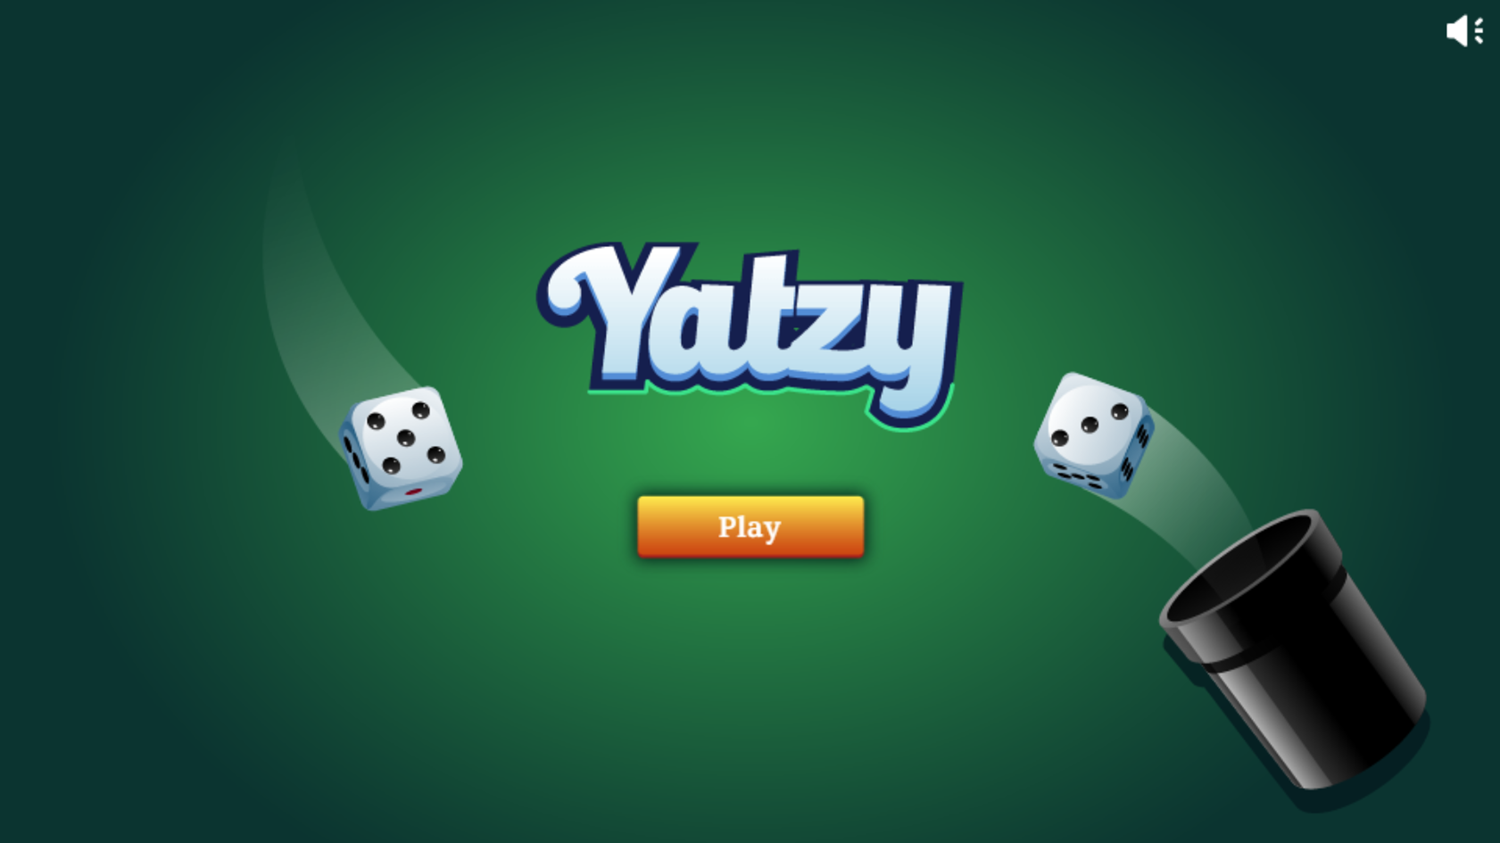 Yatzy Game Welcome Screen Screenshot.